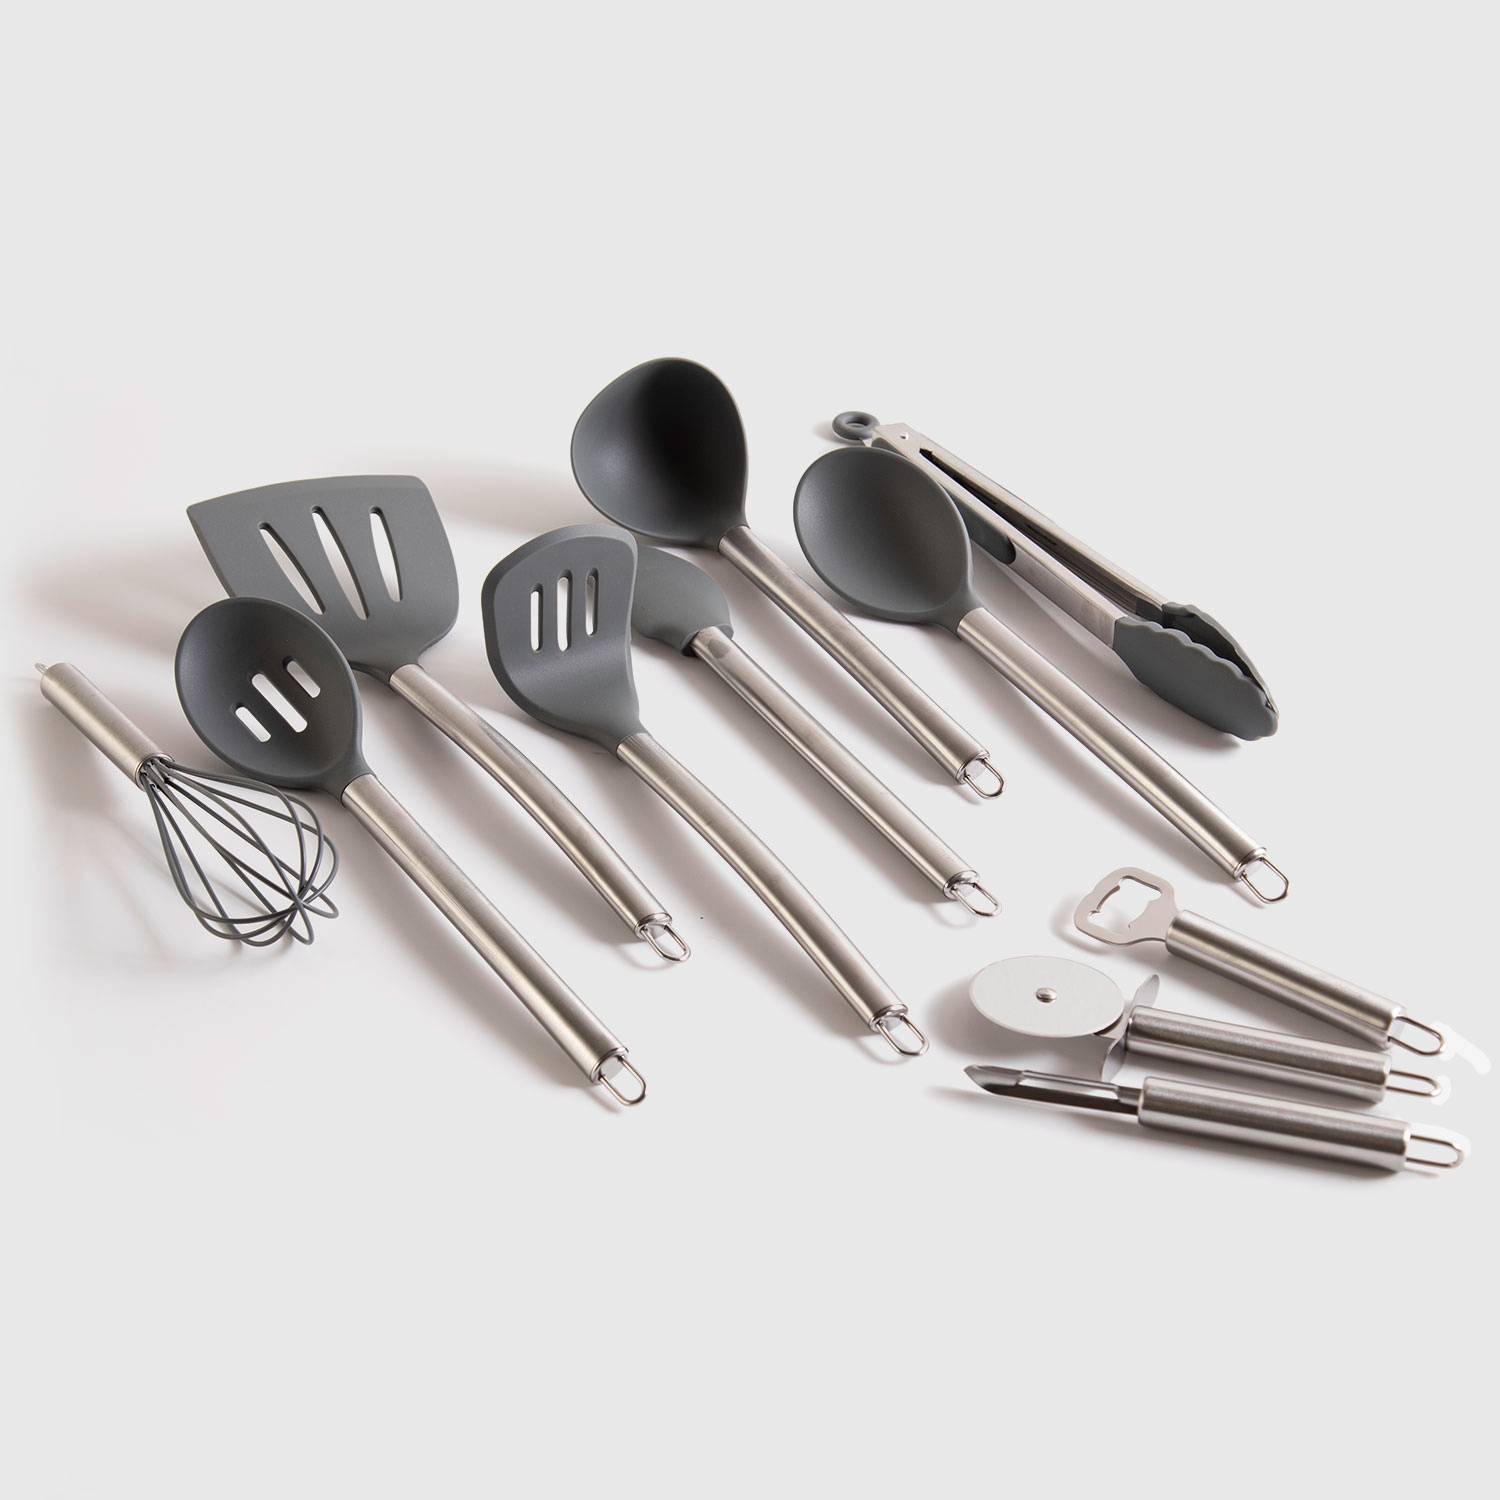 Kit utensilios de cocina (11 unidades)